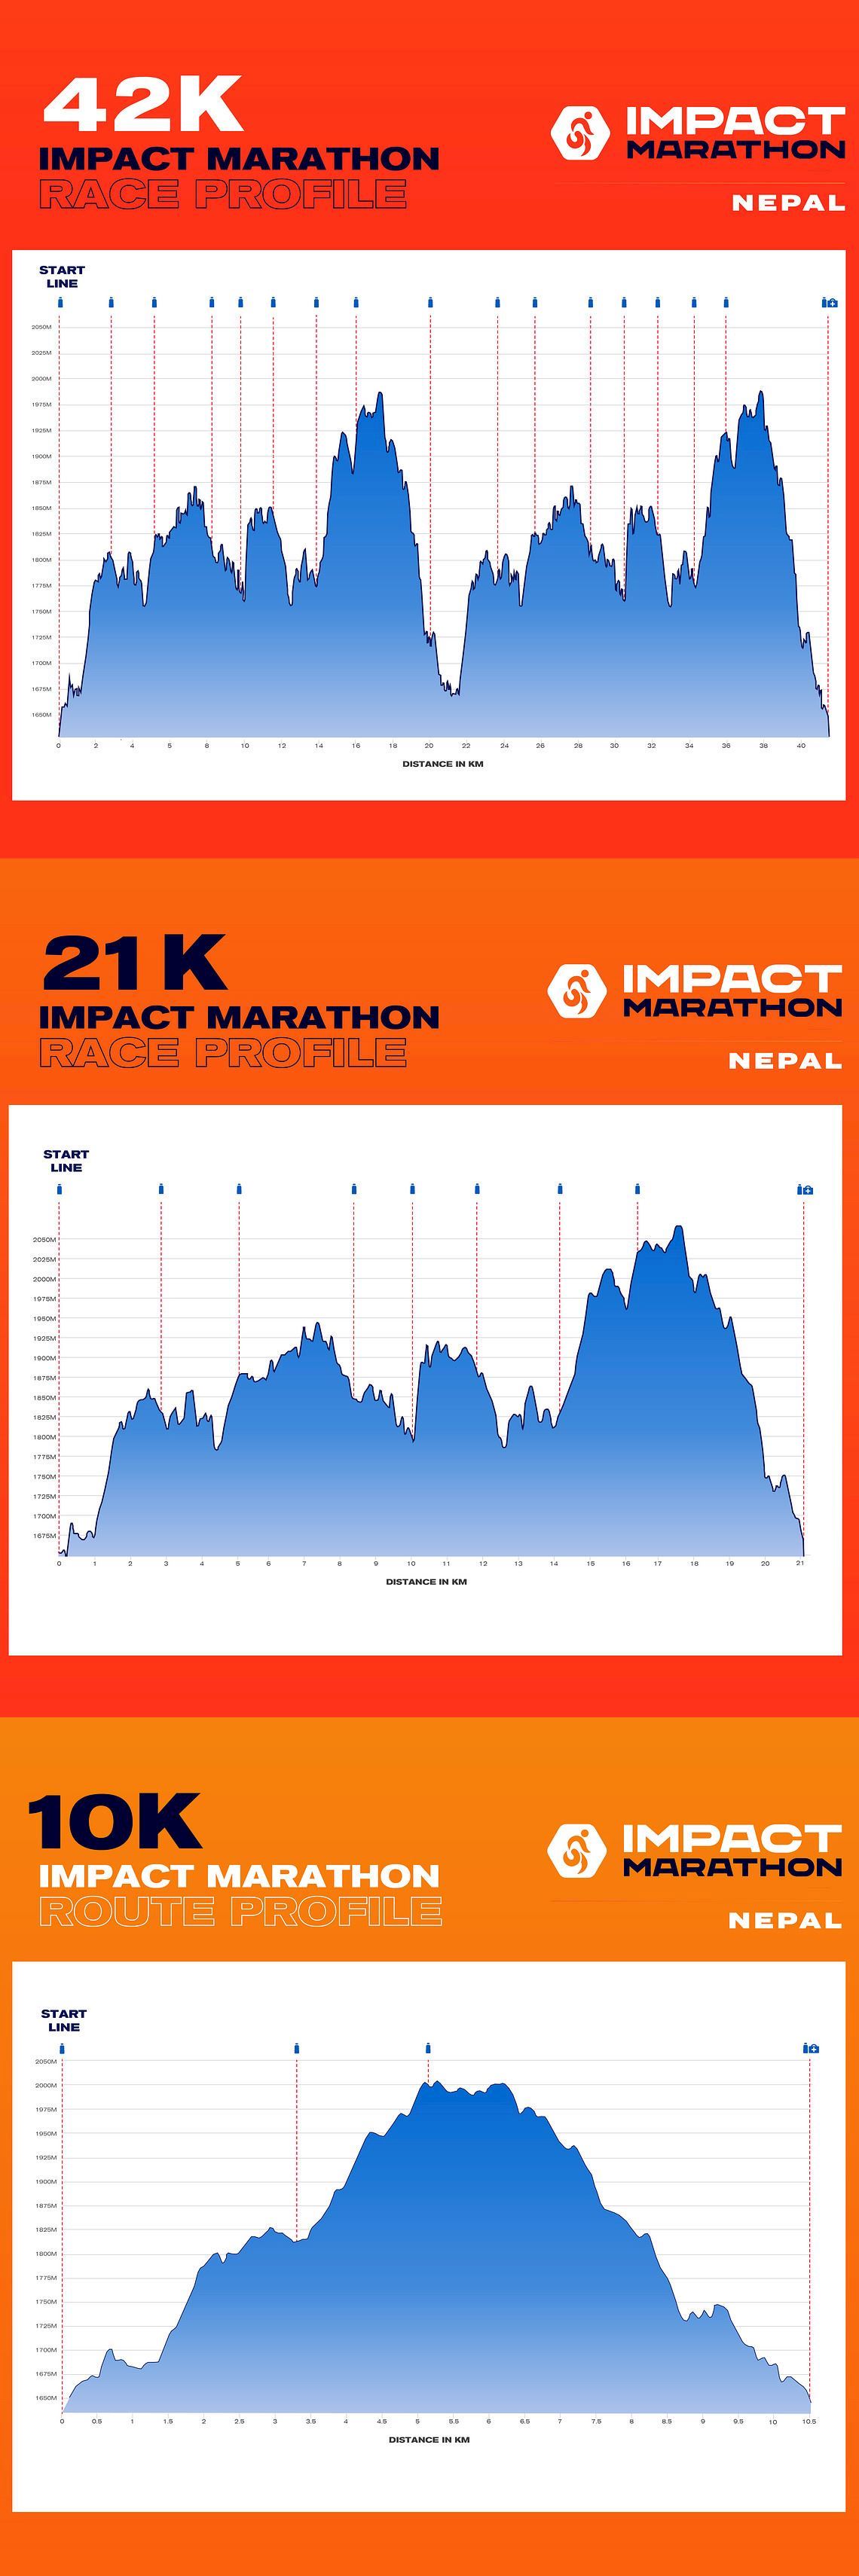 Nepal Impact Marathon ITINERAIRE